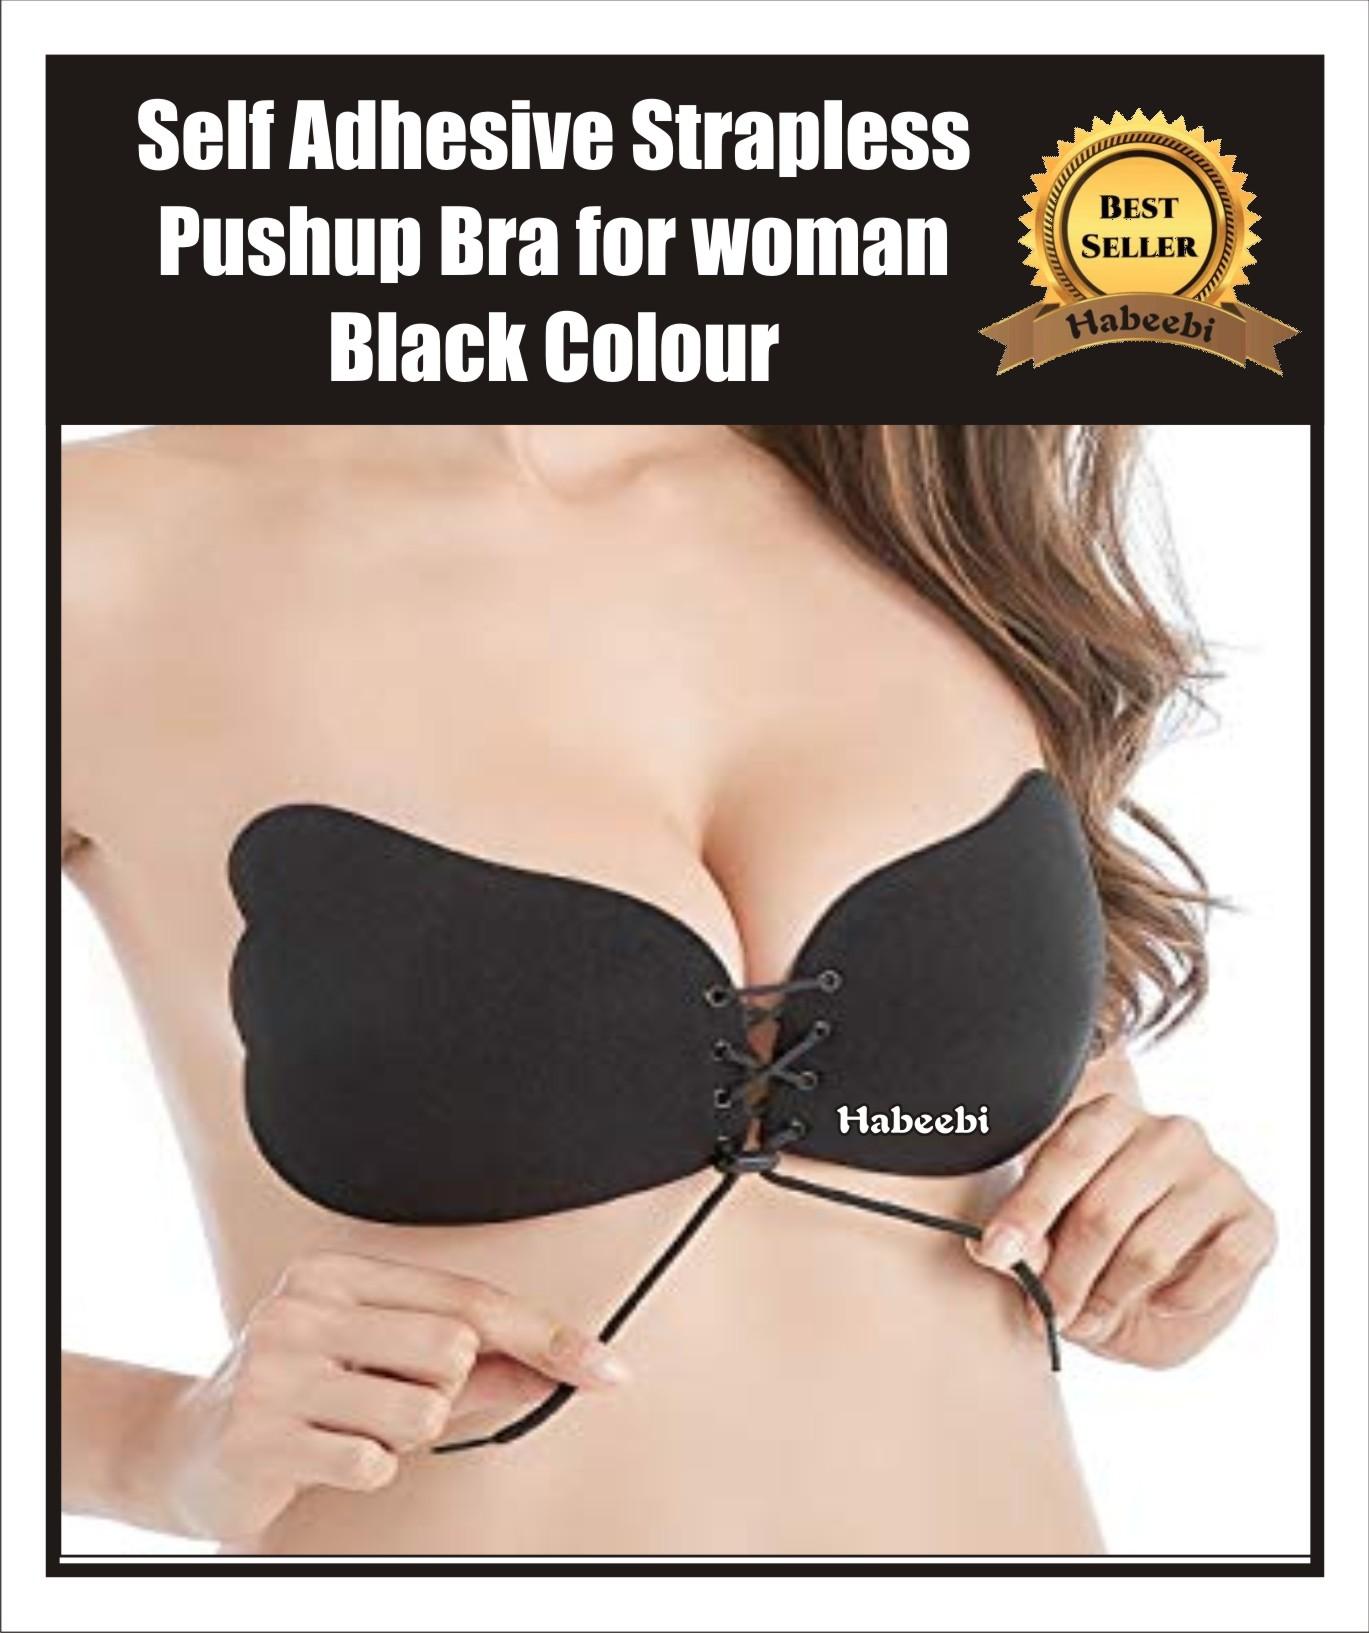 Self Adhesive Strapless Pushup Bra for woman- Black